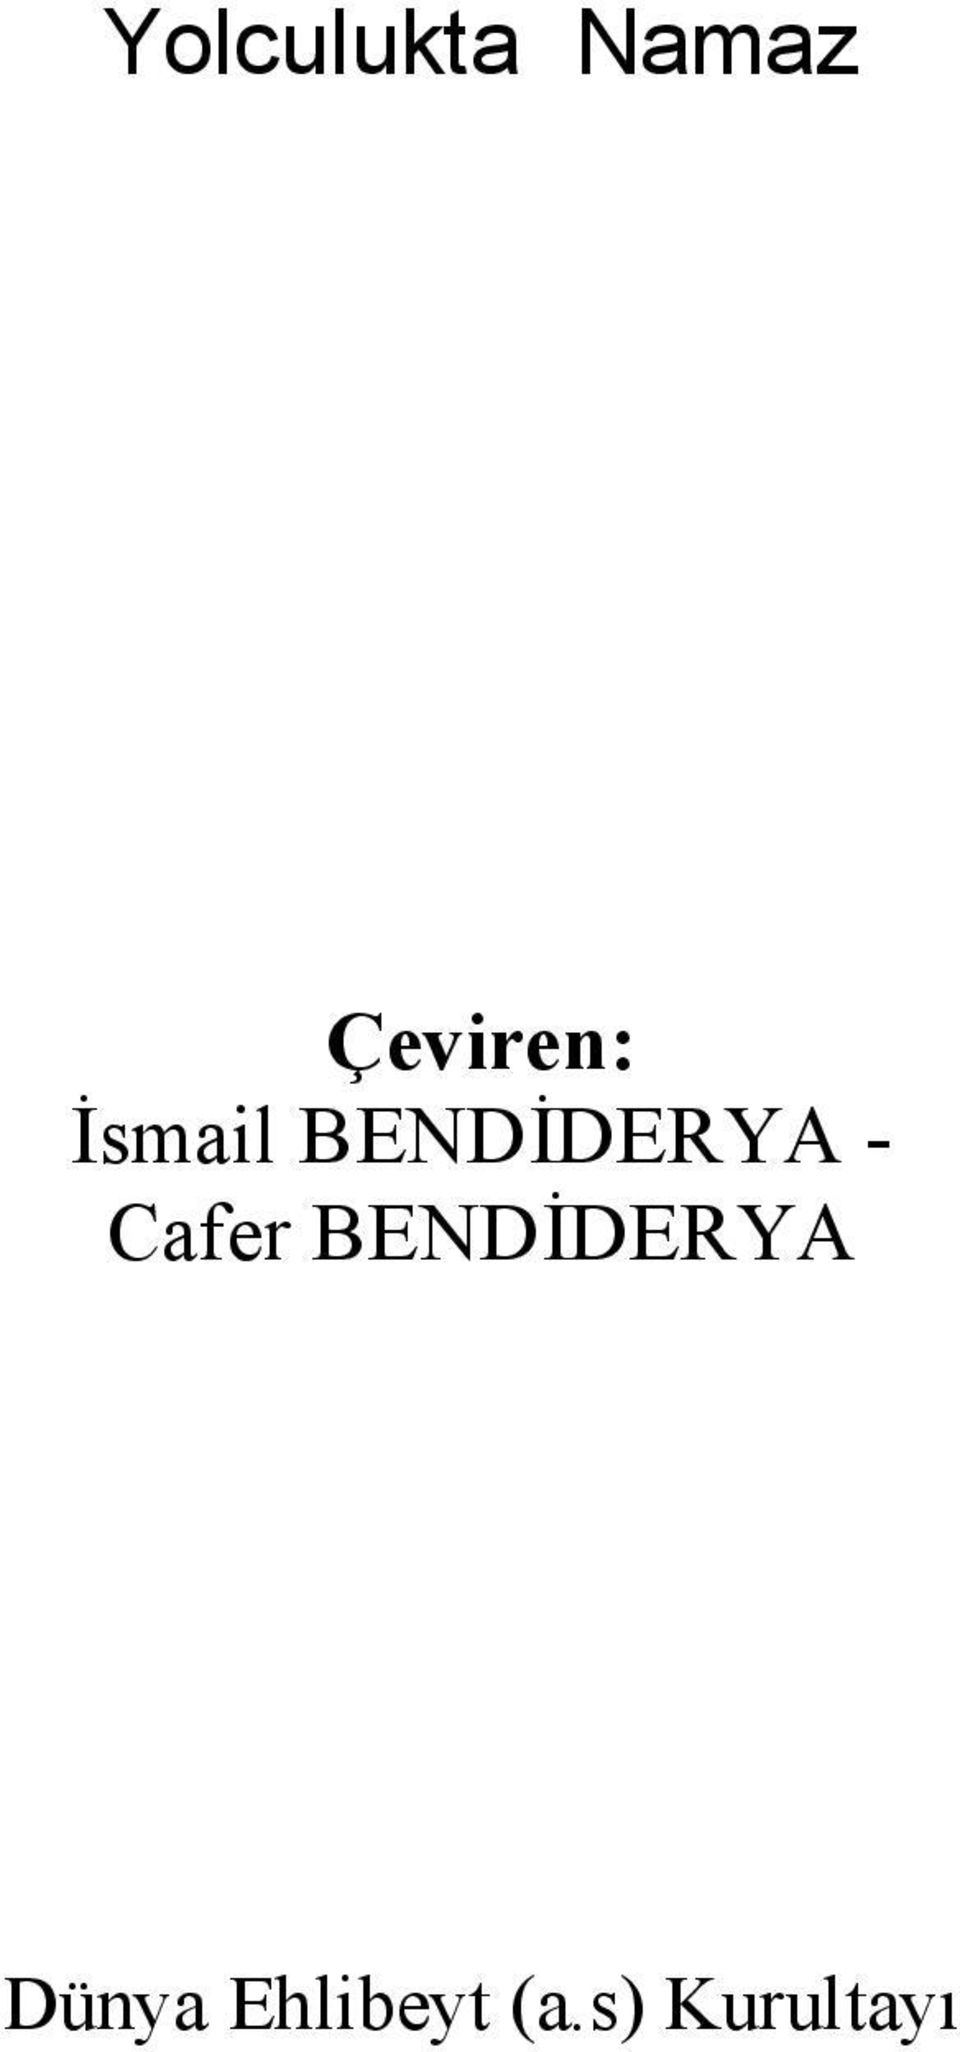 BENDİDERYA - Cafer